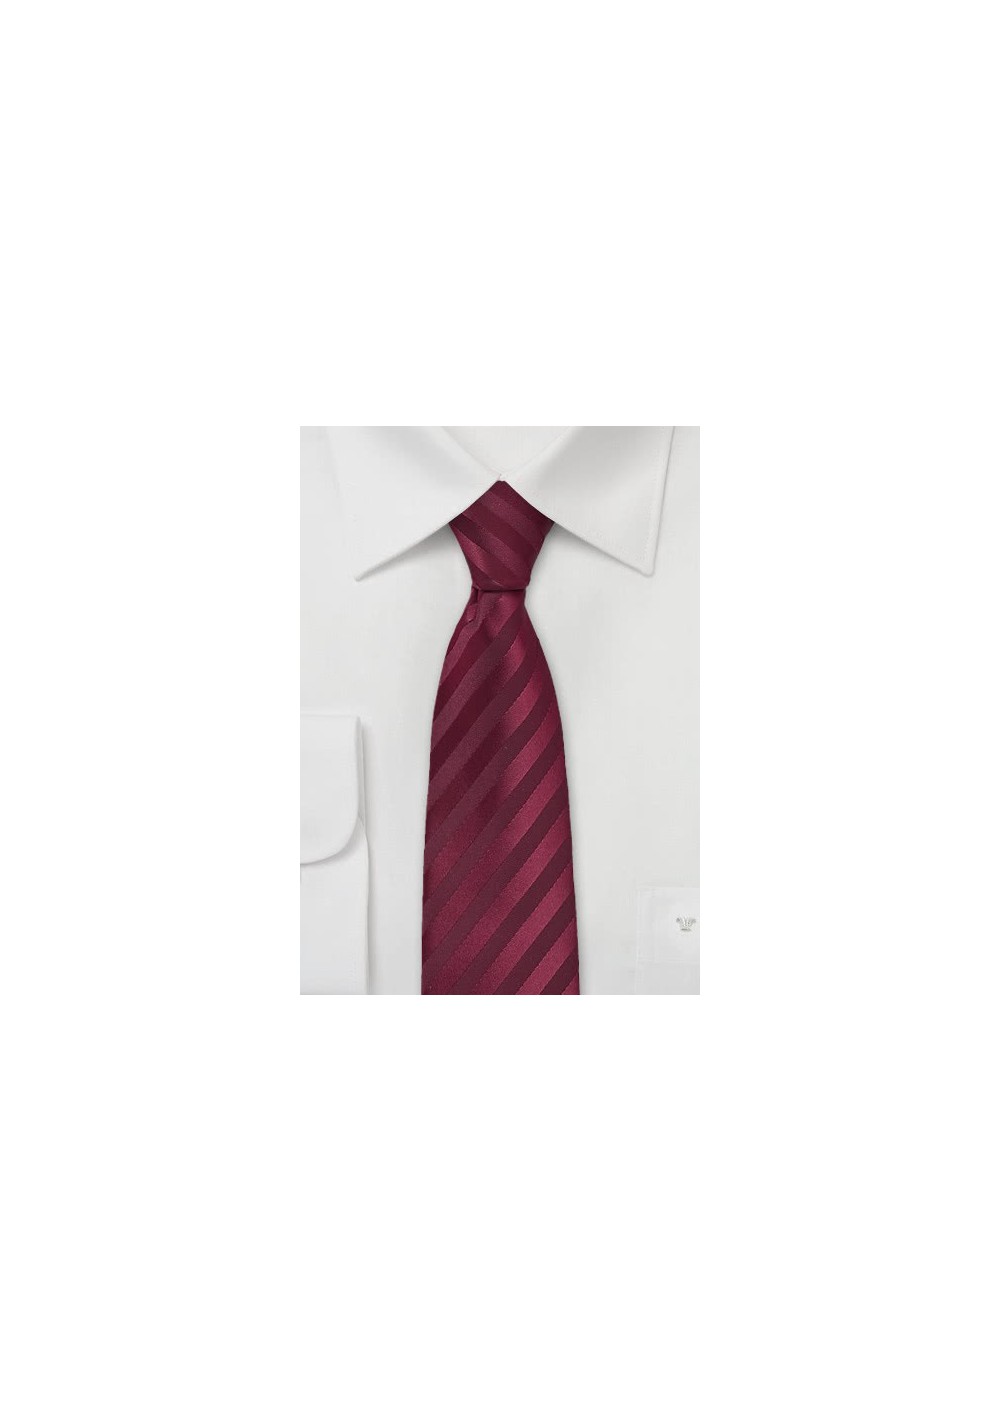 Burgundy Red Skinny Tie with Stripes